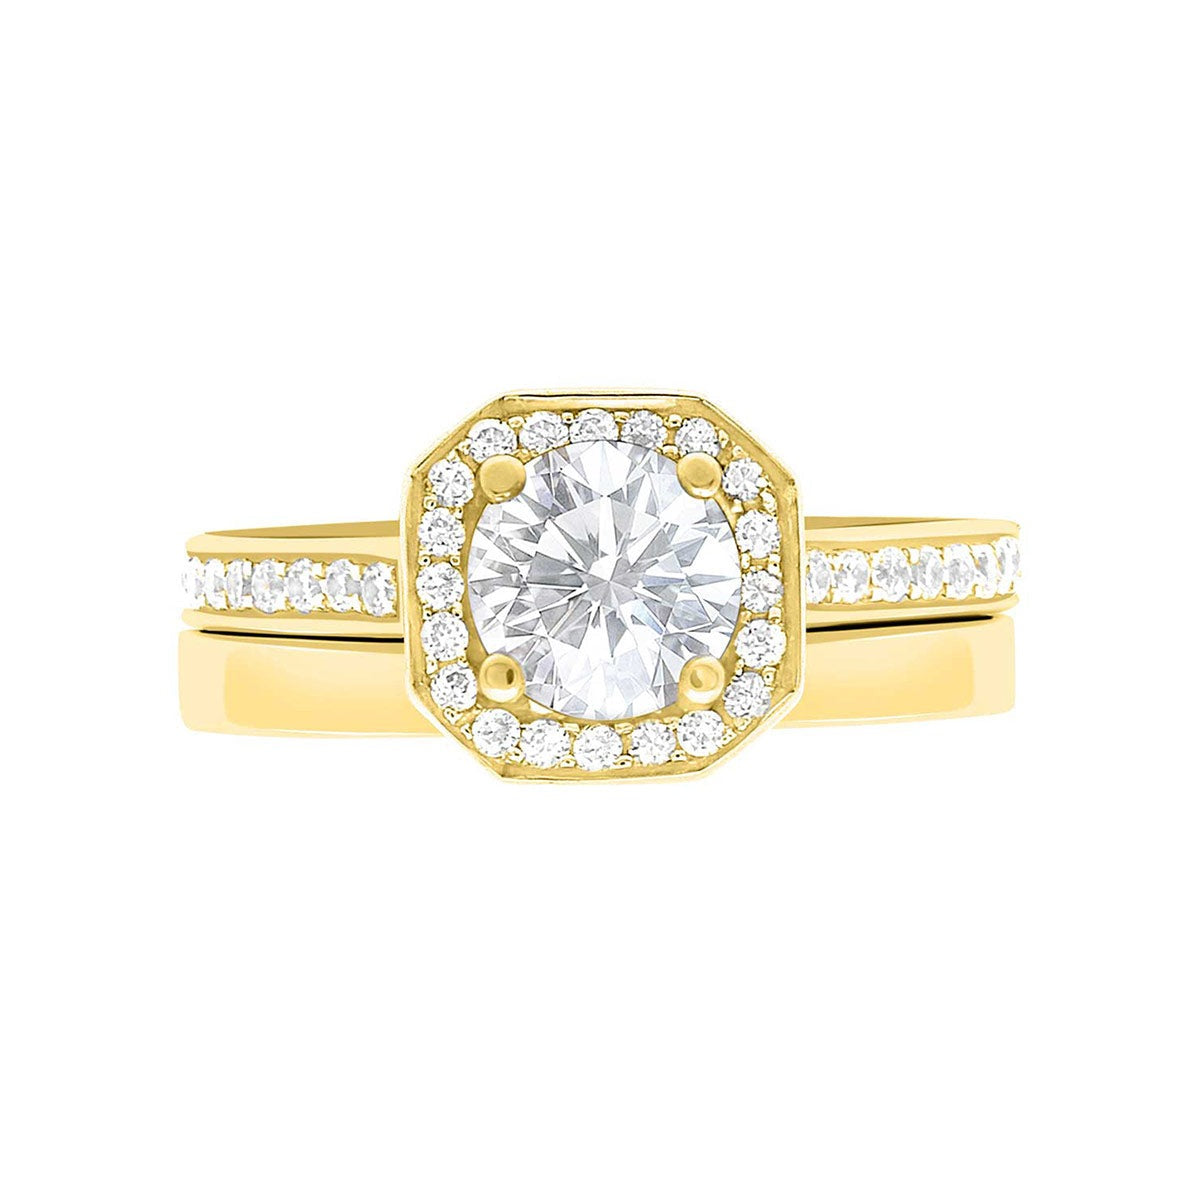 Pavé Halo Diamond Ring in yellow Gold laying flat with a matching plain wedding band